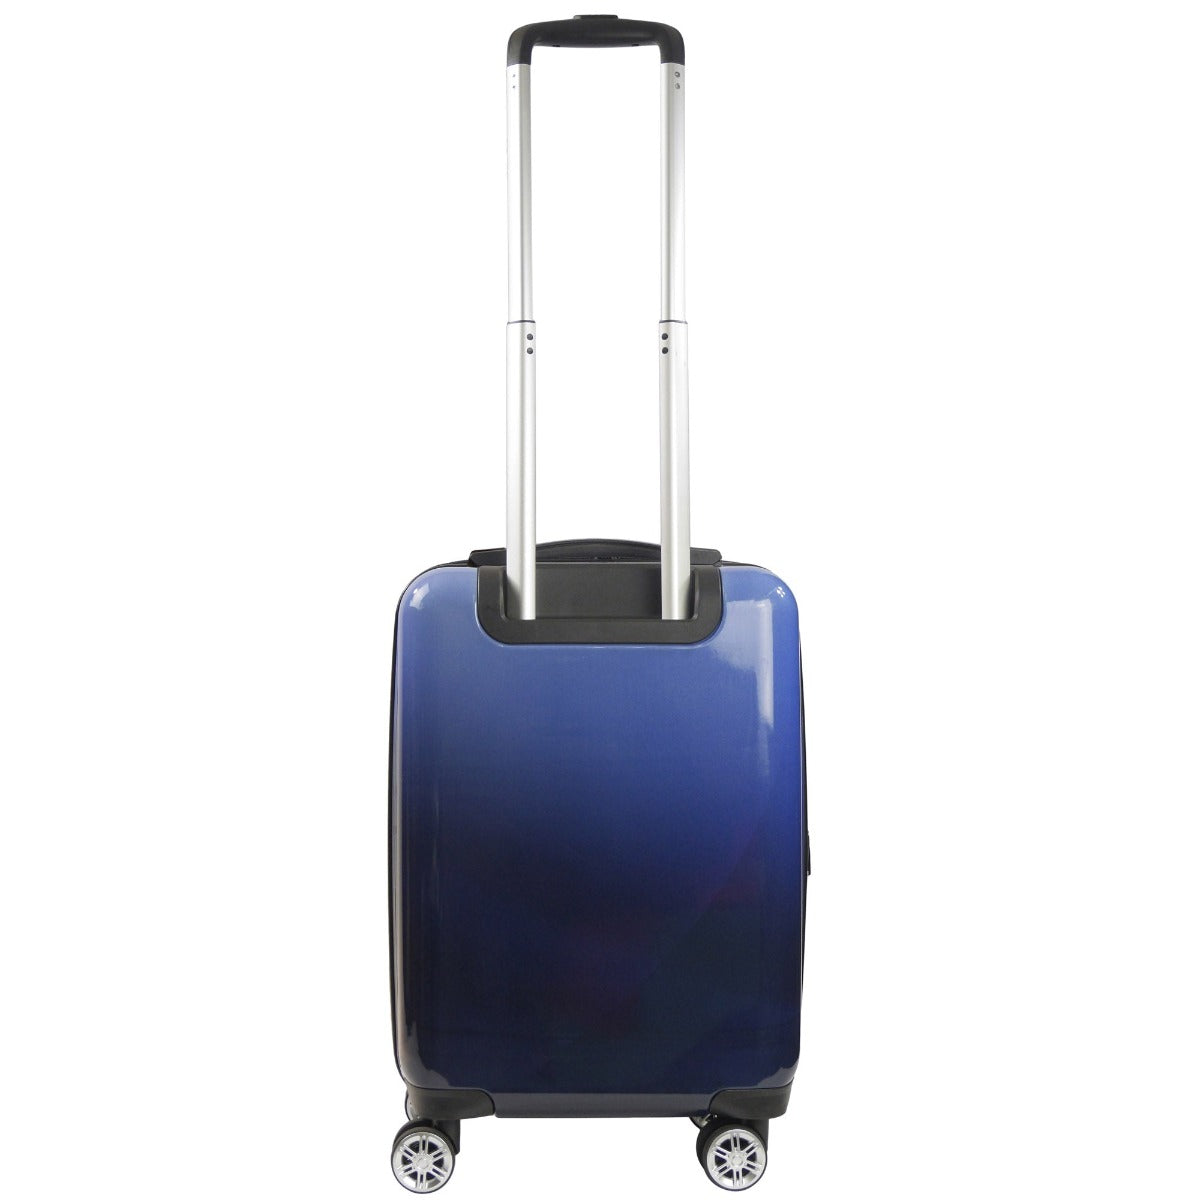 Ful Impulse Ombre Hardside Spinner Suitcase 22" Luggage, Blue